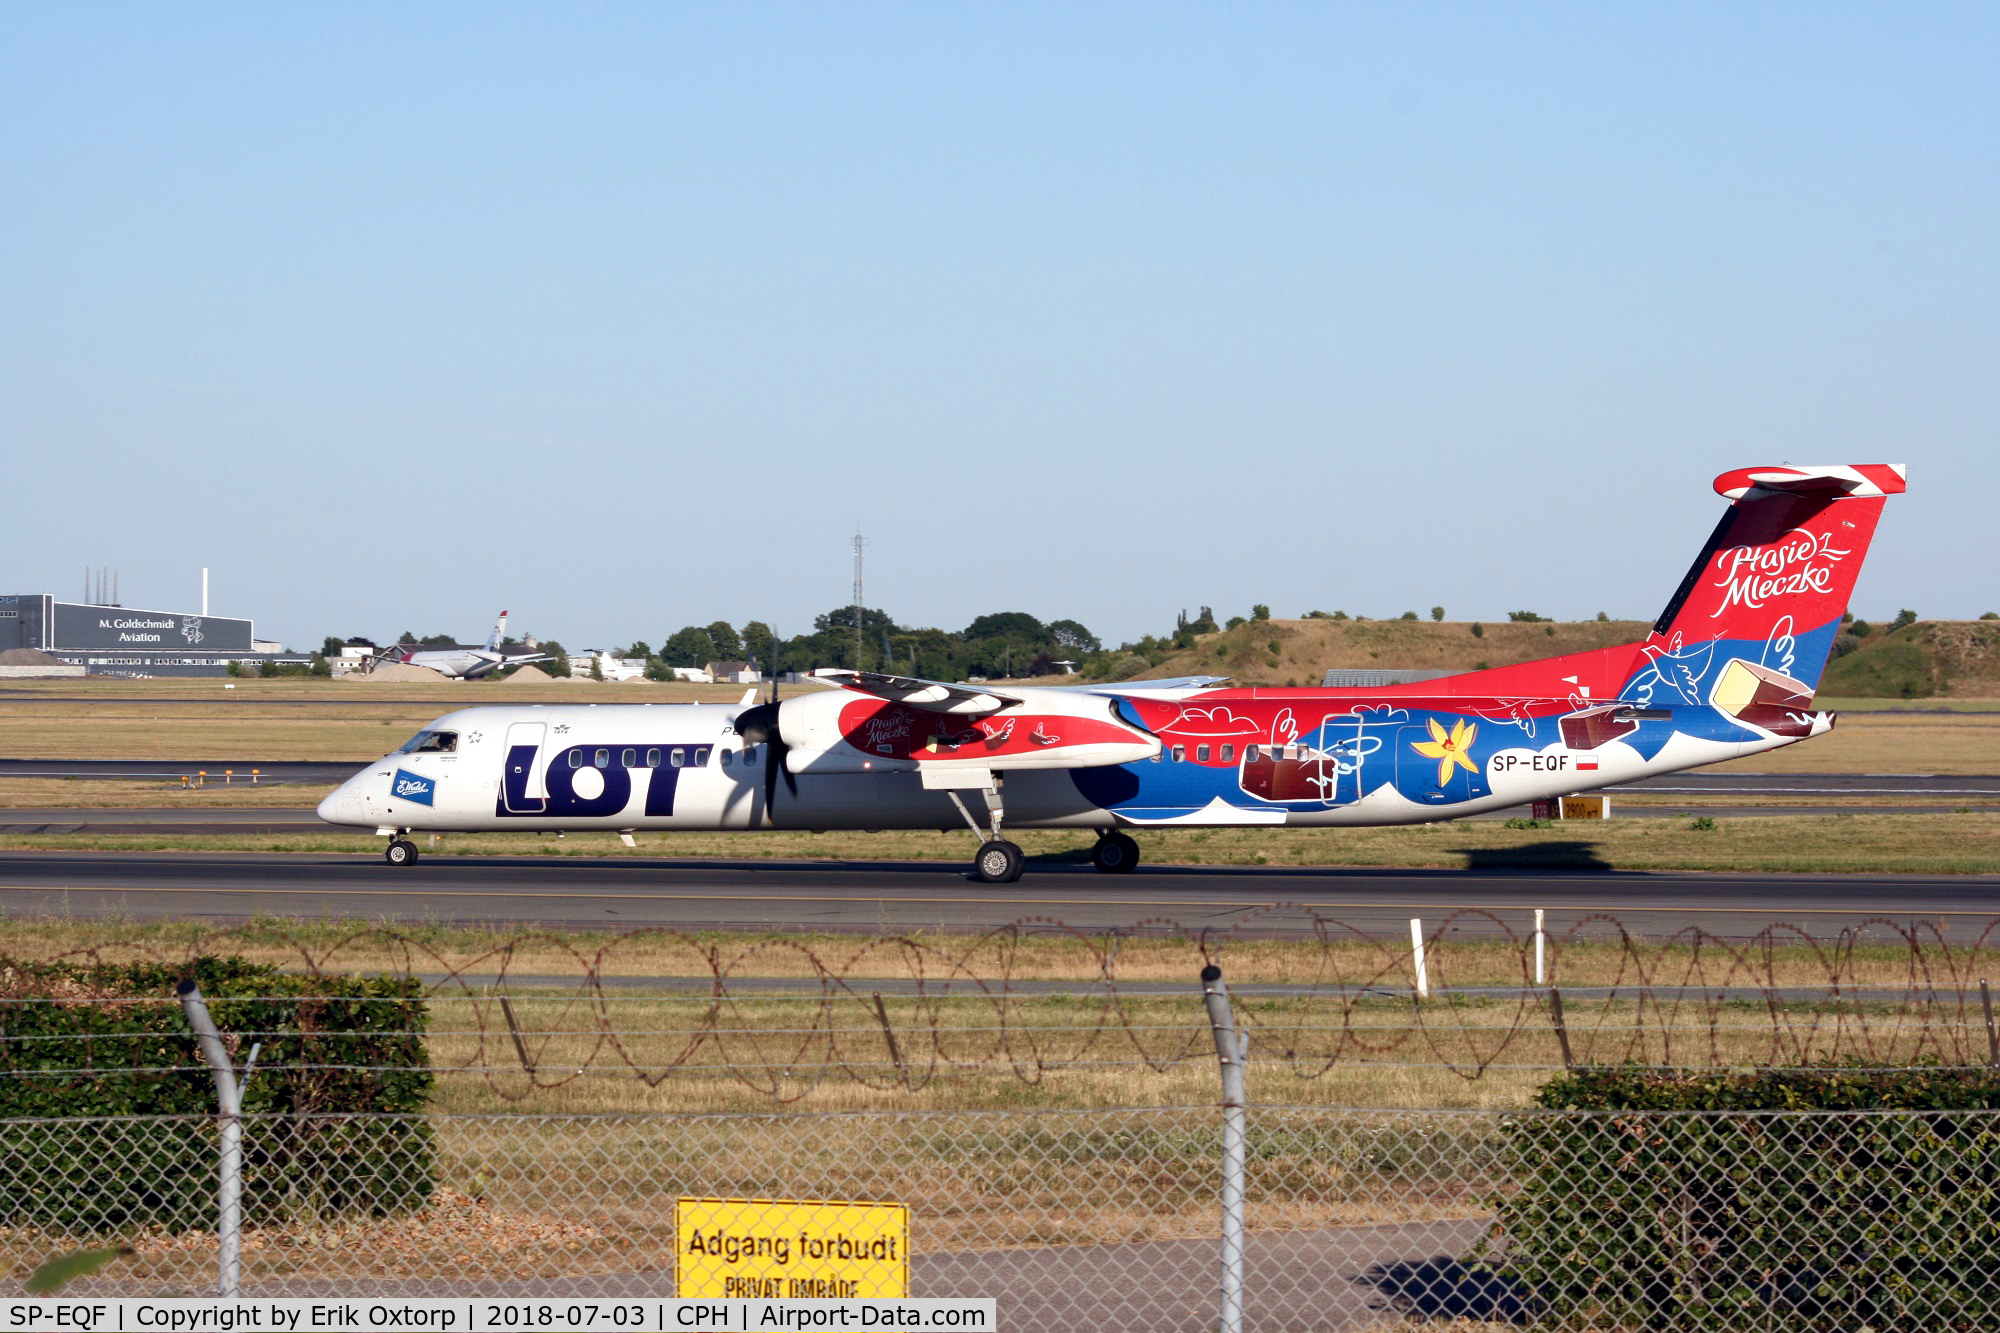 SP-EQF, 2012 Bombardier DHC-8-402Q Dash 8 Dash 8 C/N 4422, SP-EQF landed rw 04L